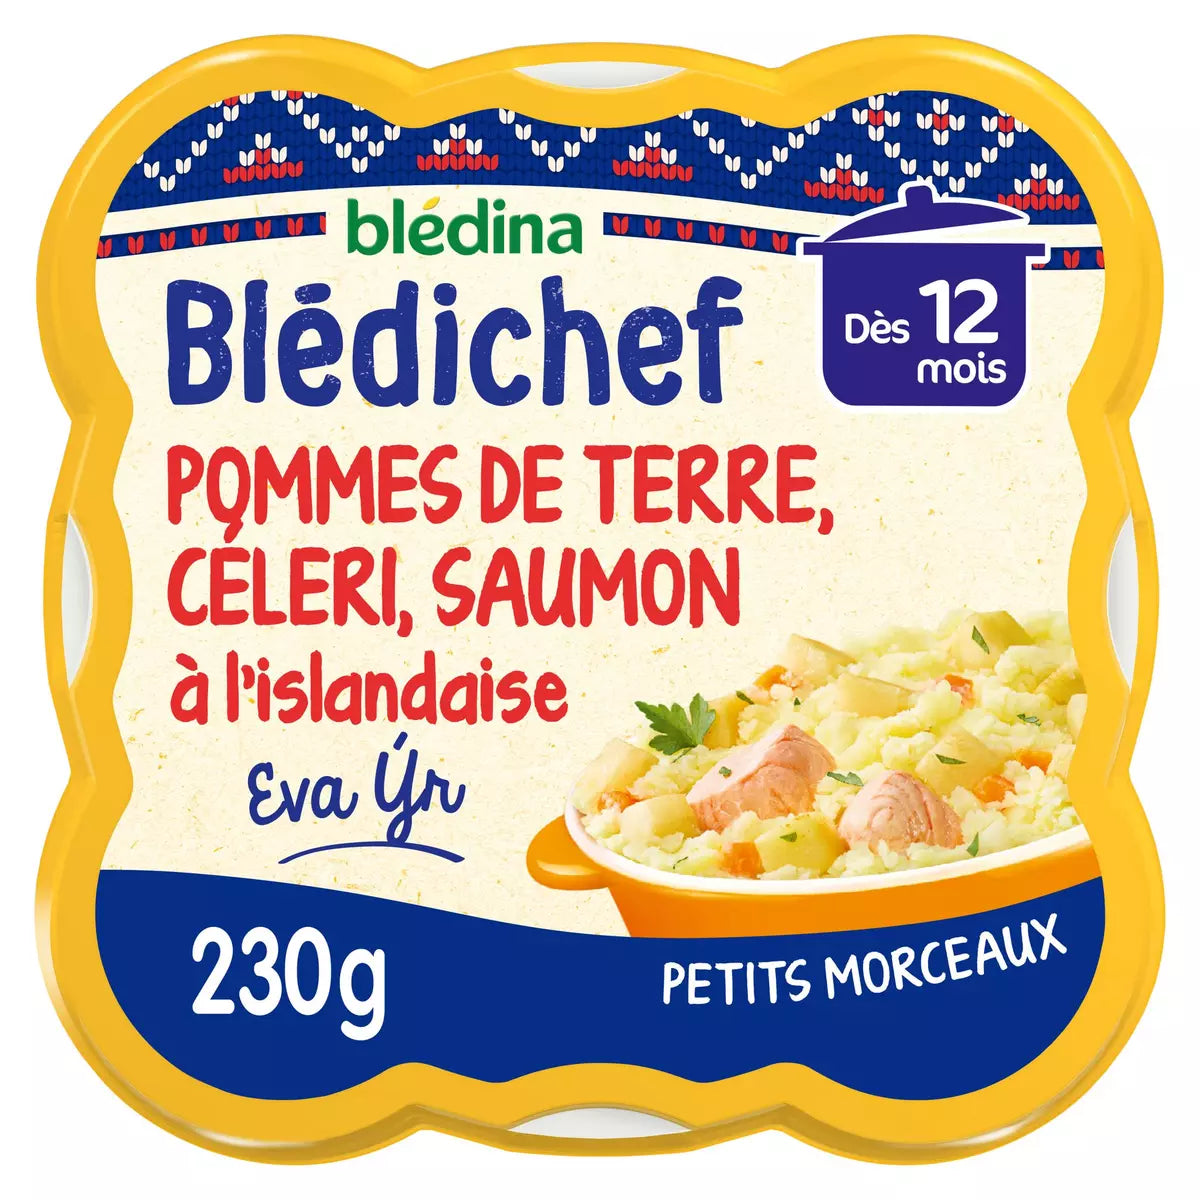 Bledina Blédichef Plac Potato Celery Salmon Icelandic from 12 months 230g -d23